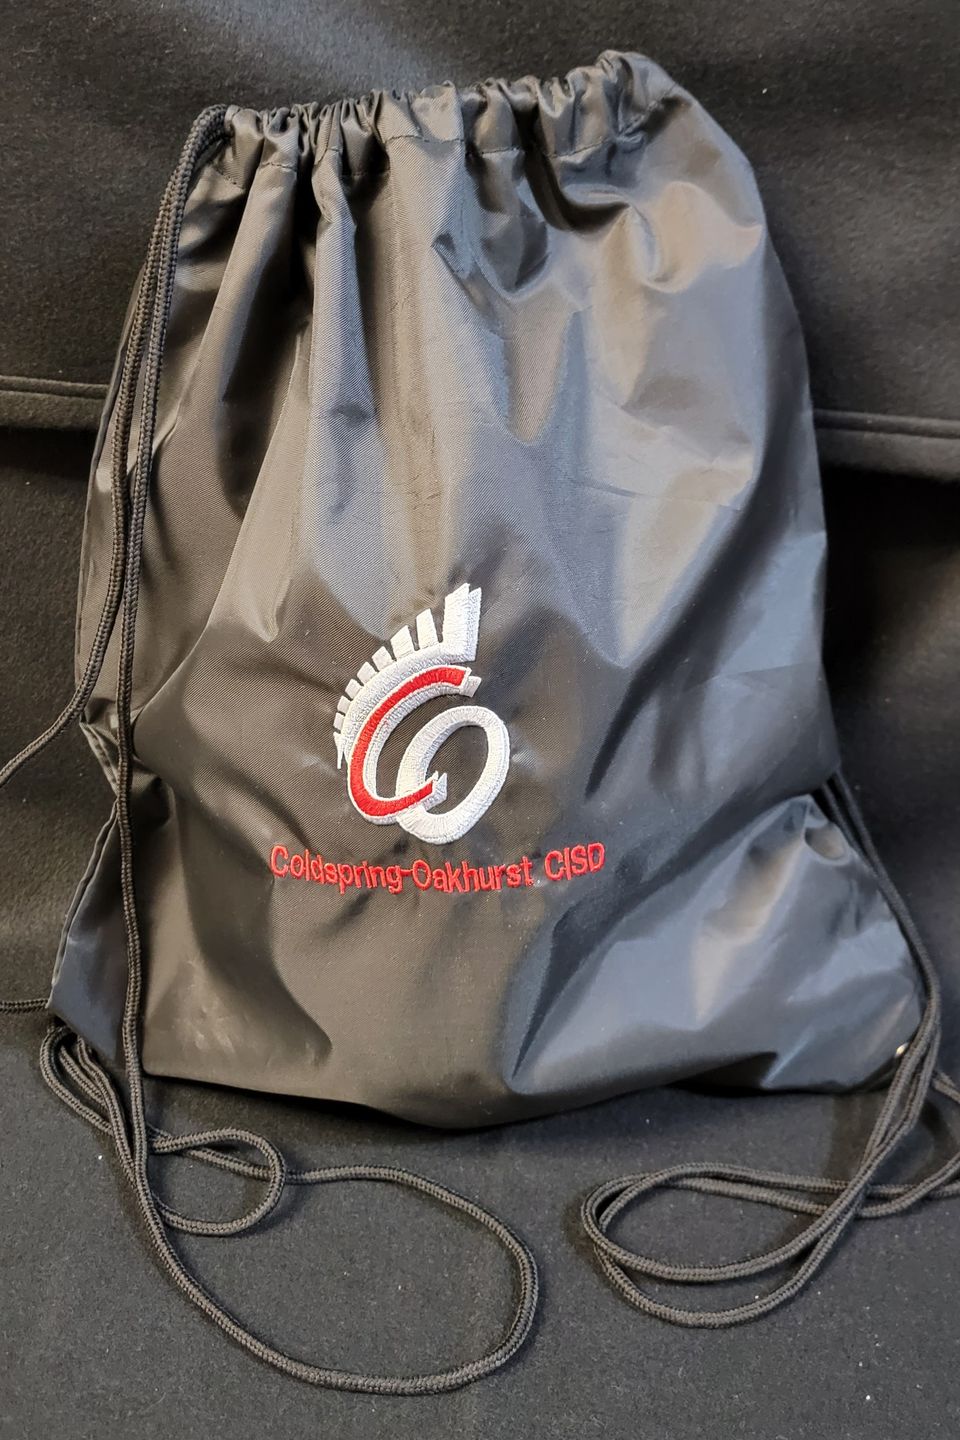 Coldspring CISD school logo embroidered onto drawstring sports bag